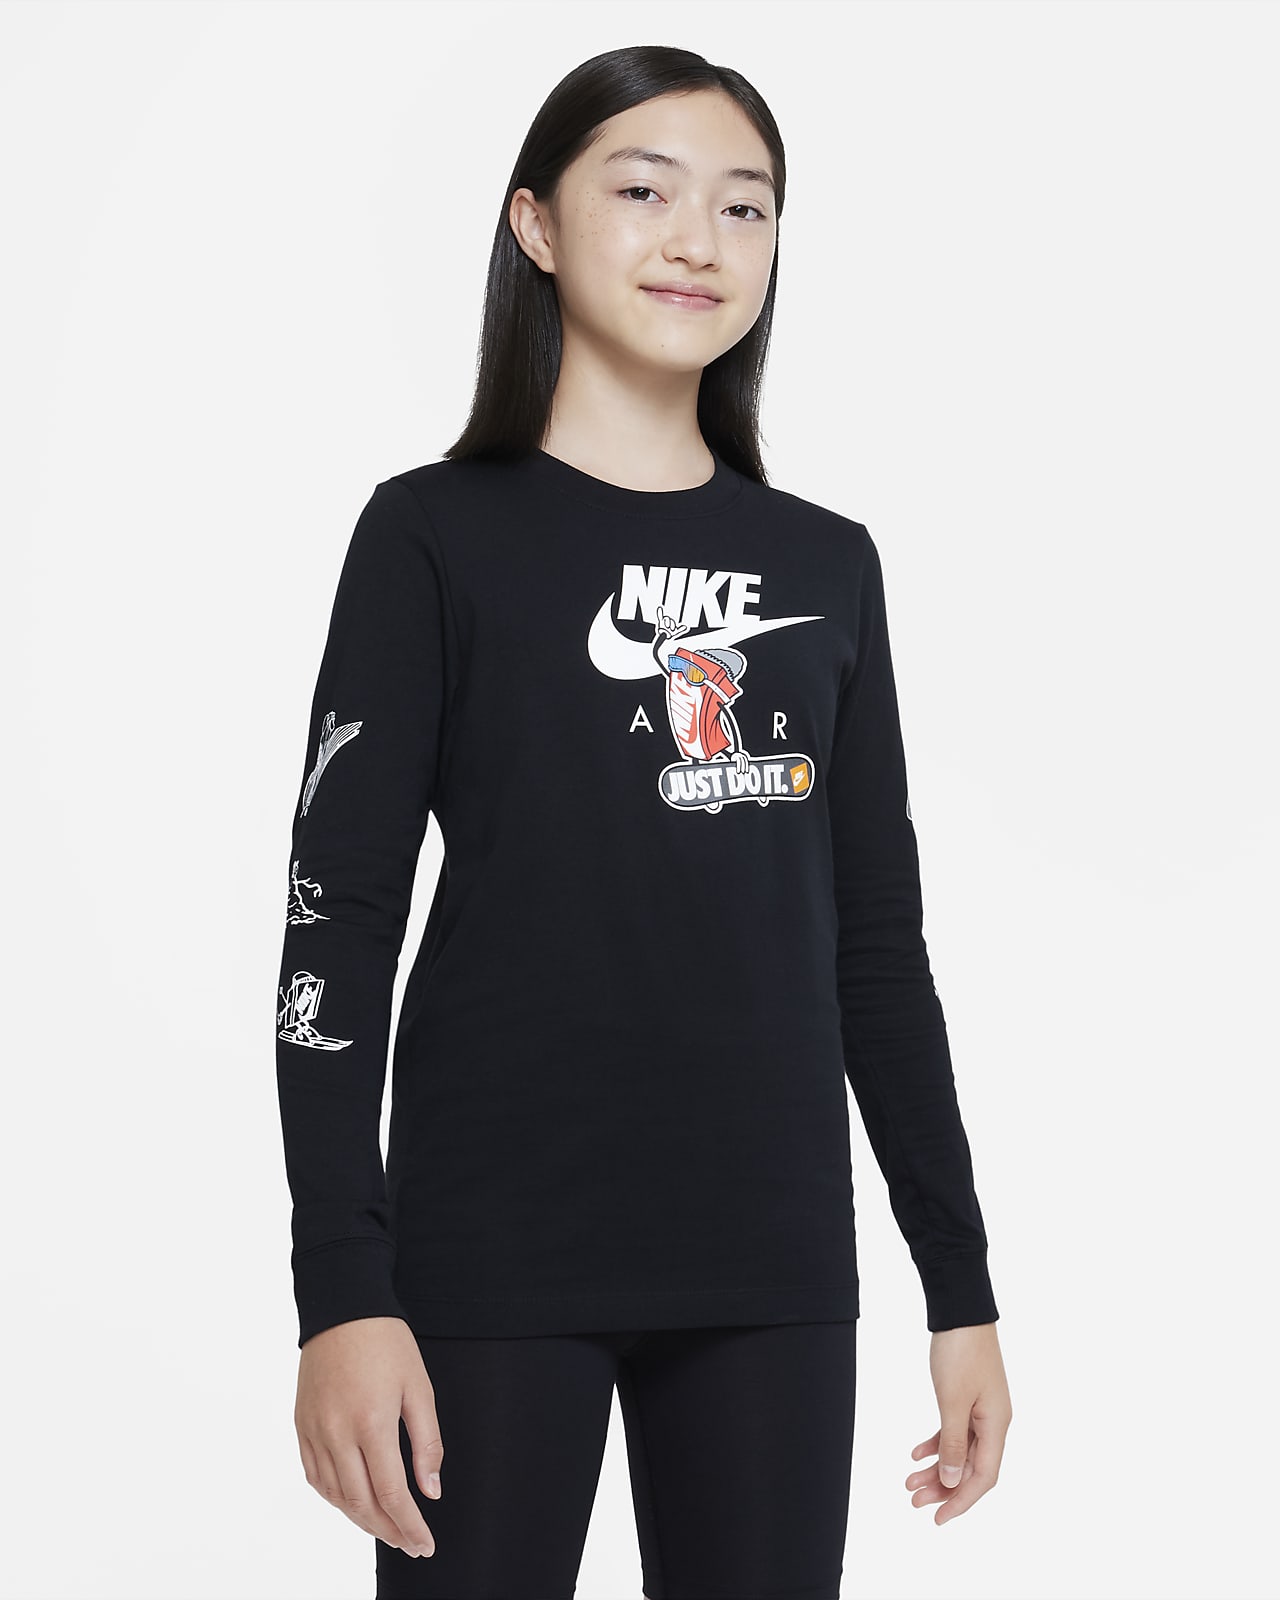 Camiseta de - Niño/a. Nike ES